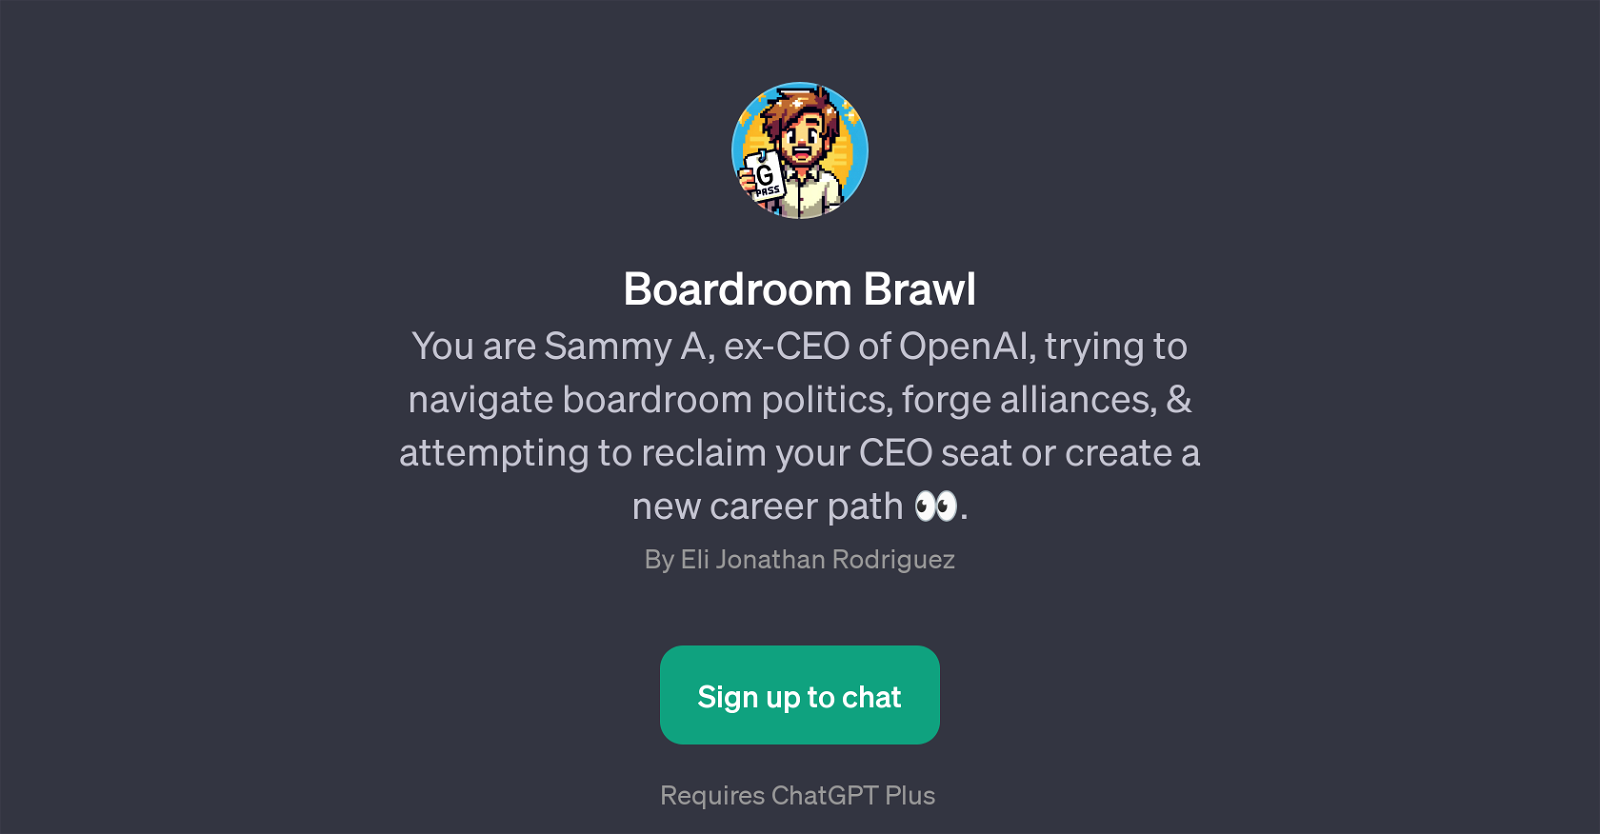 Boardroom Brawl website